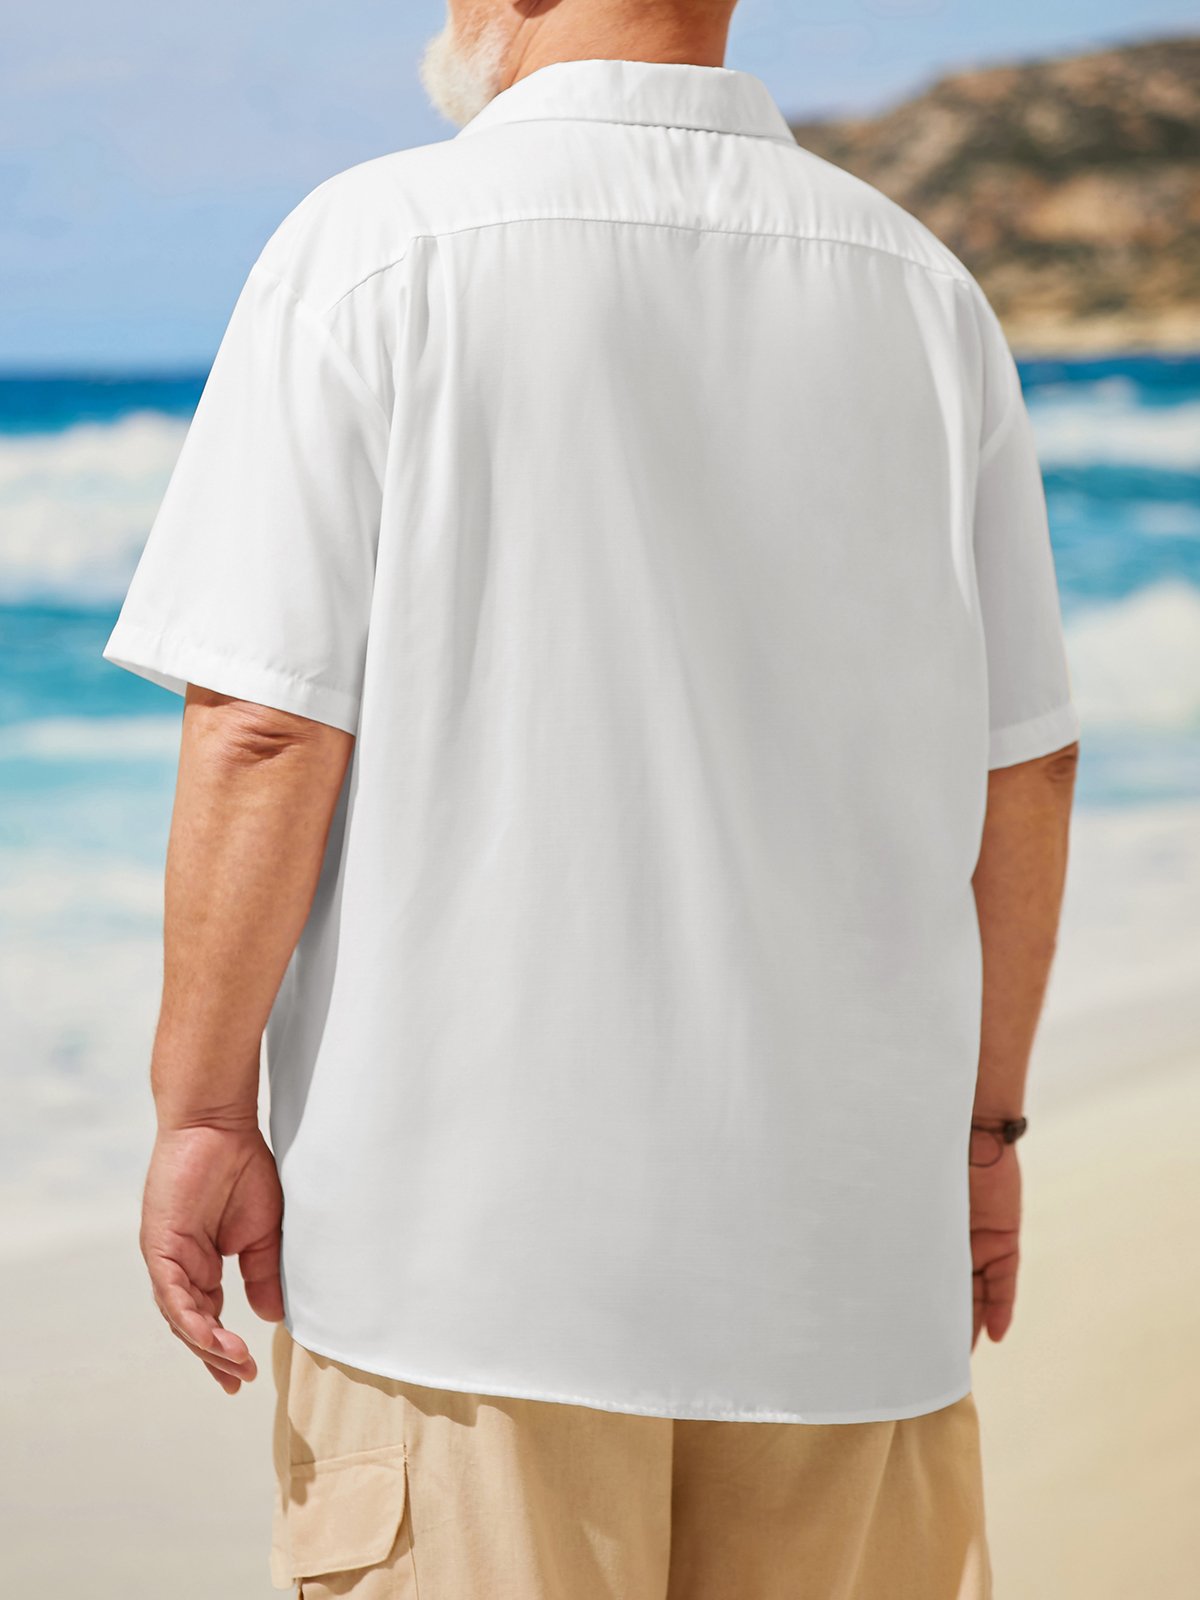 Hardaddy Big Size Coconut Tree Chest Pocket Short Sleeve Resort Shirt